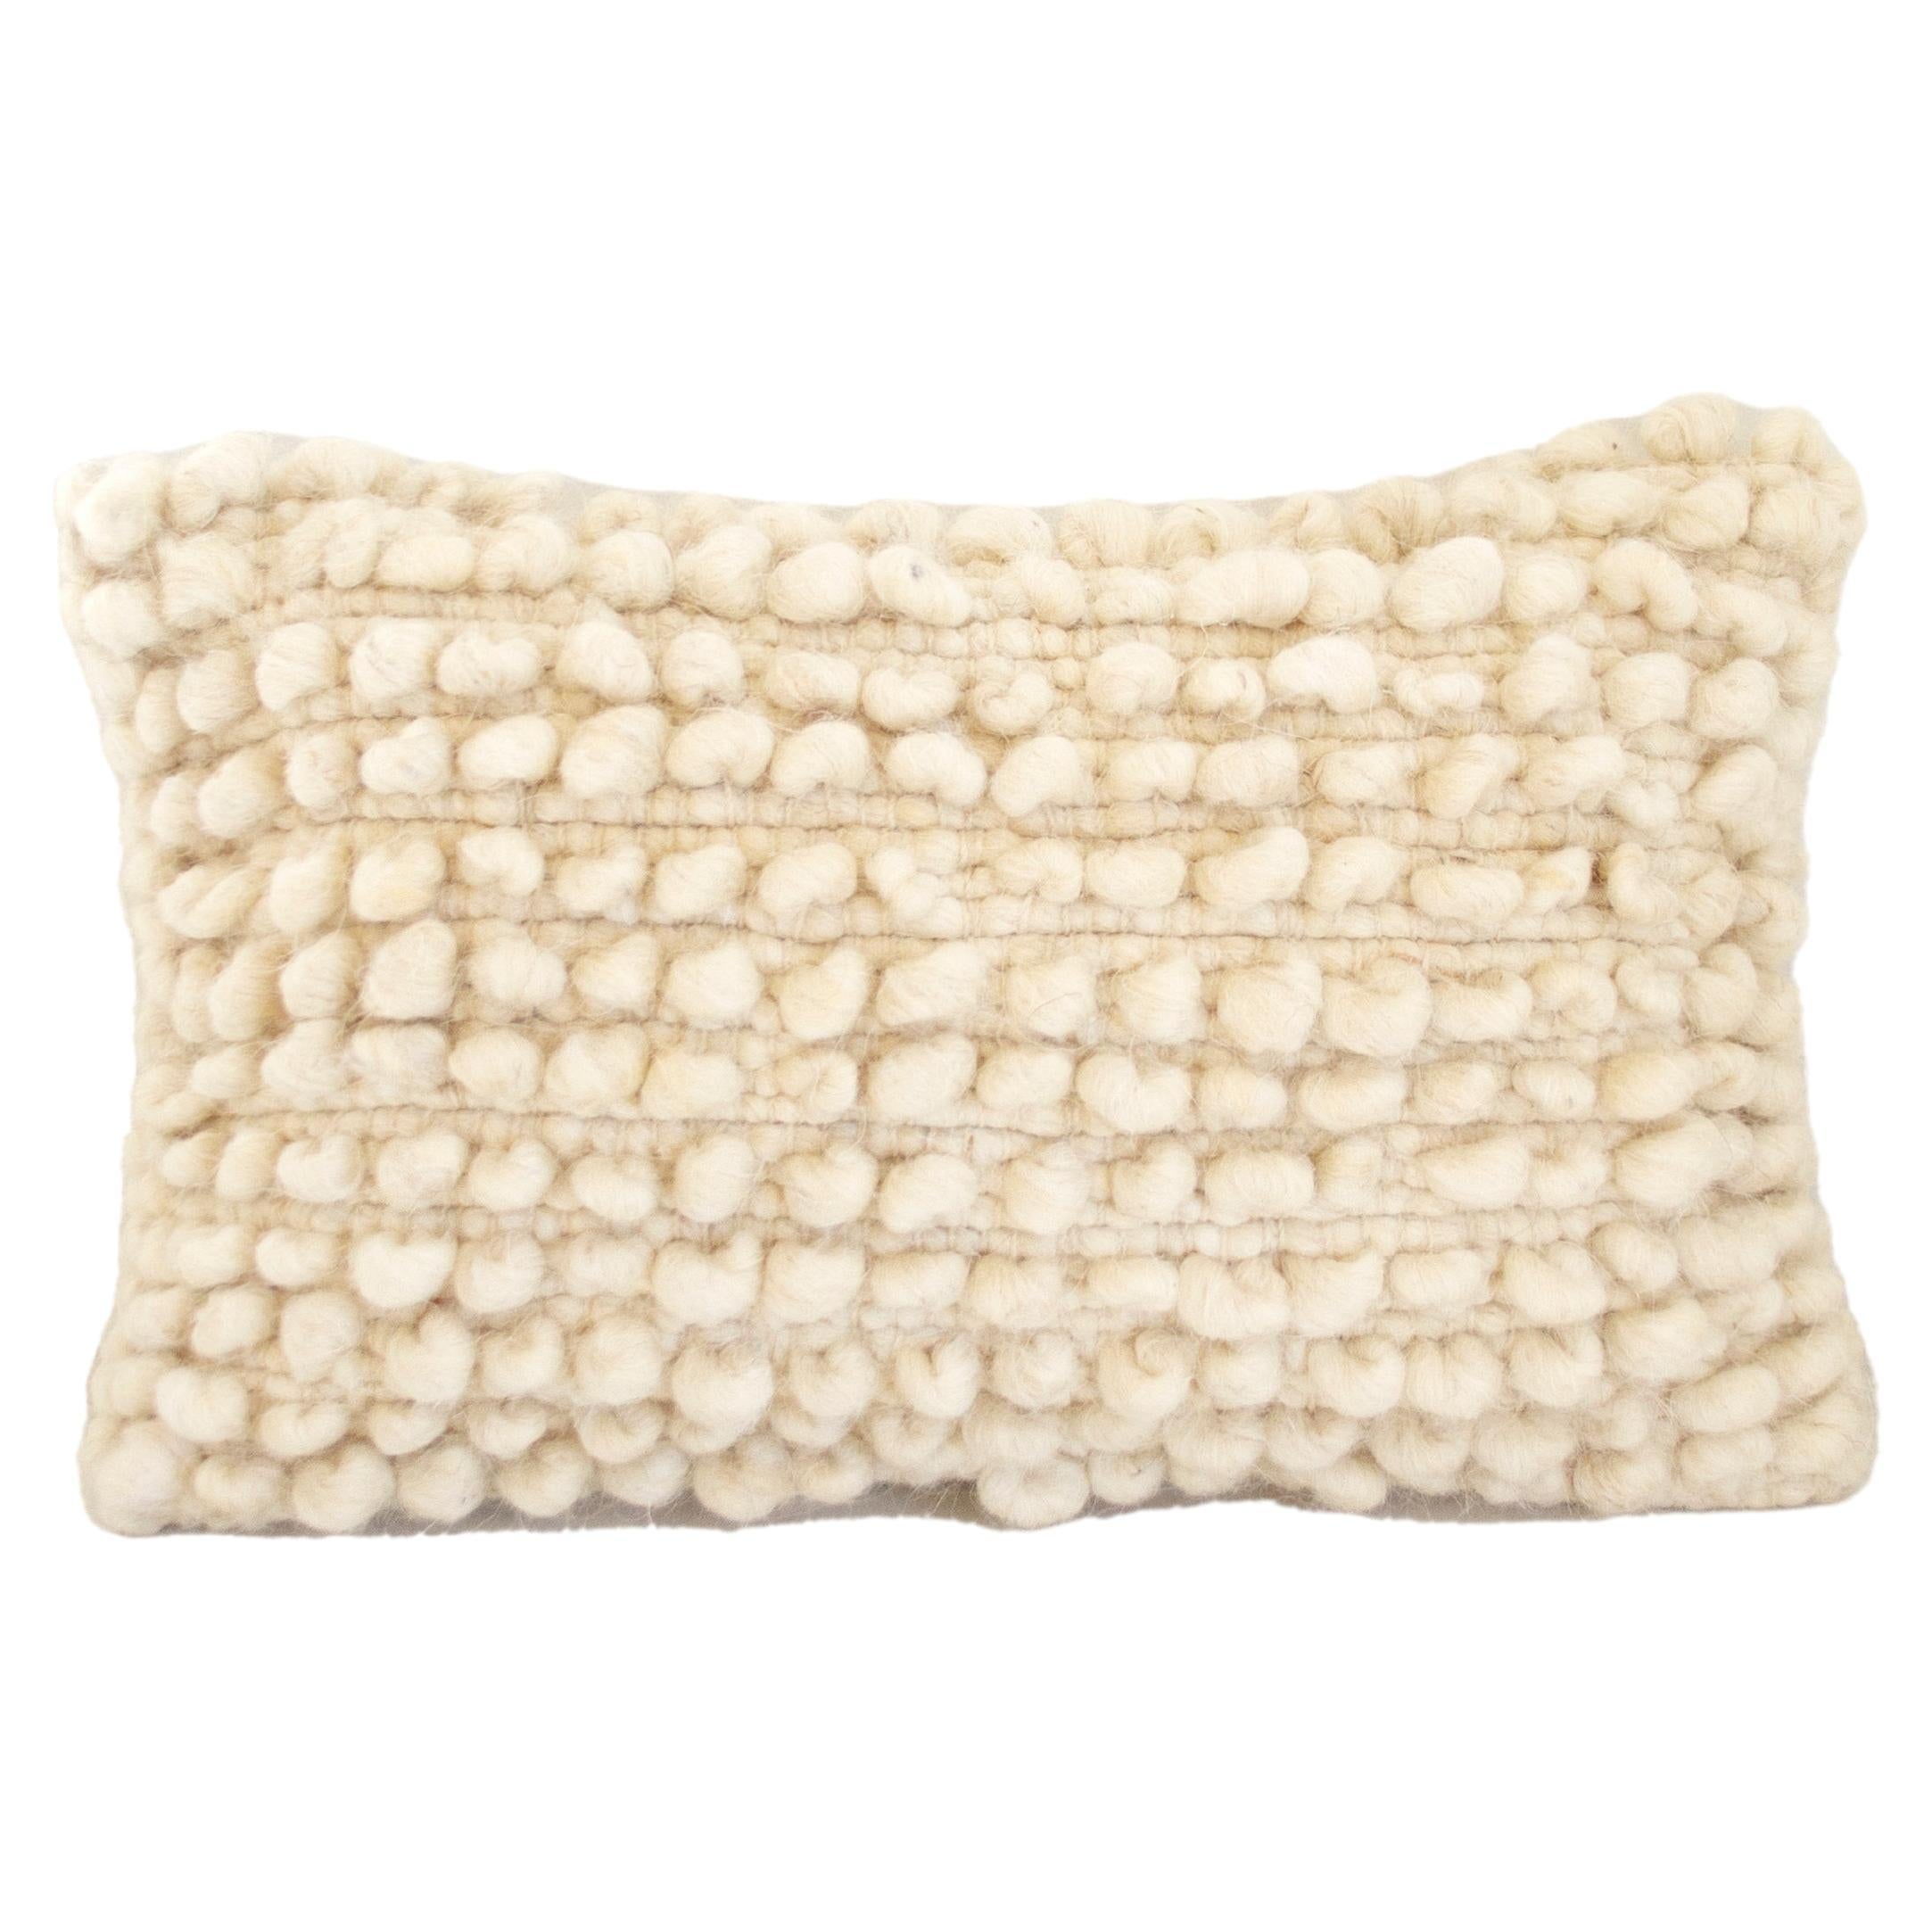 Fatima Bobble Throw Pillow in Cream White en 100% laine de mouton - 20" x 12".